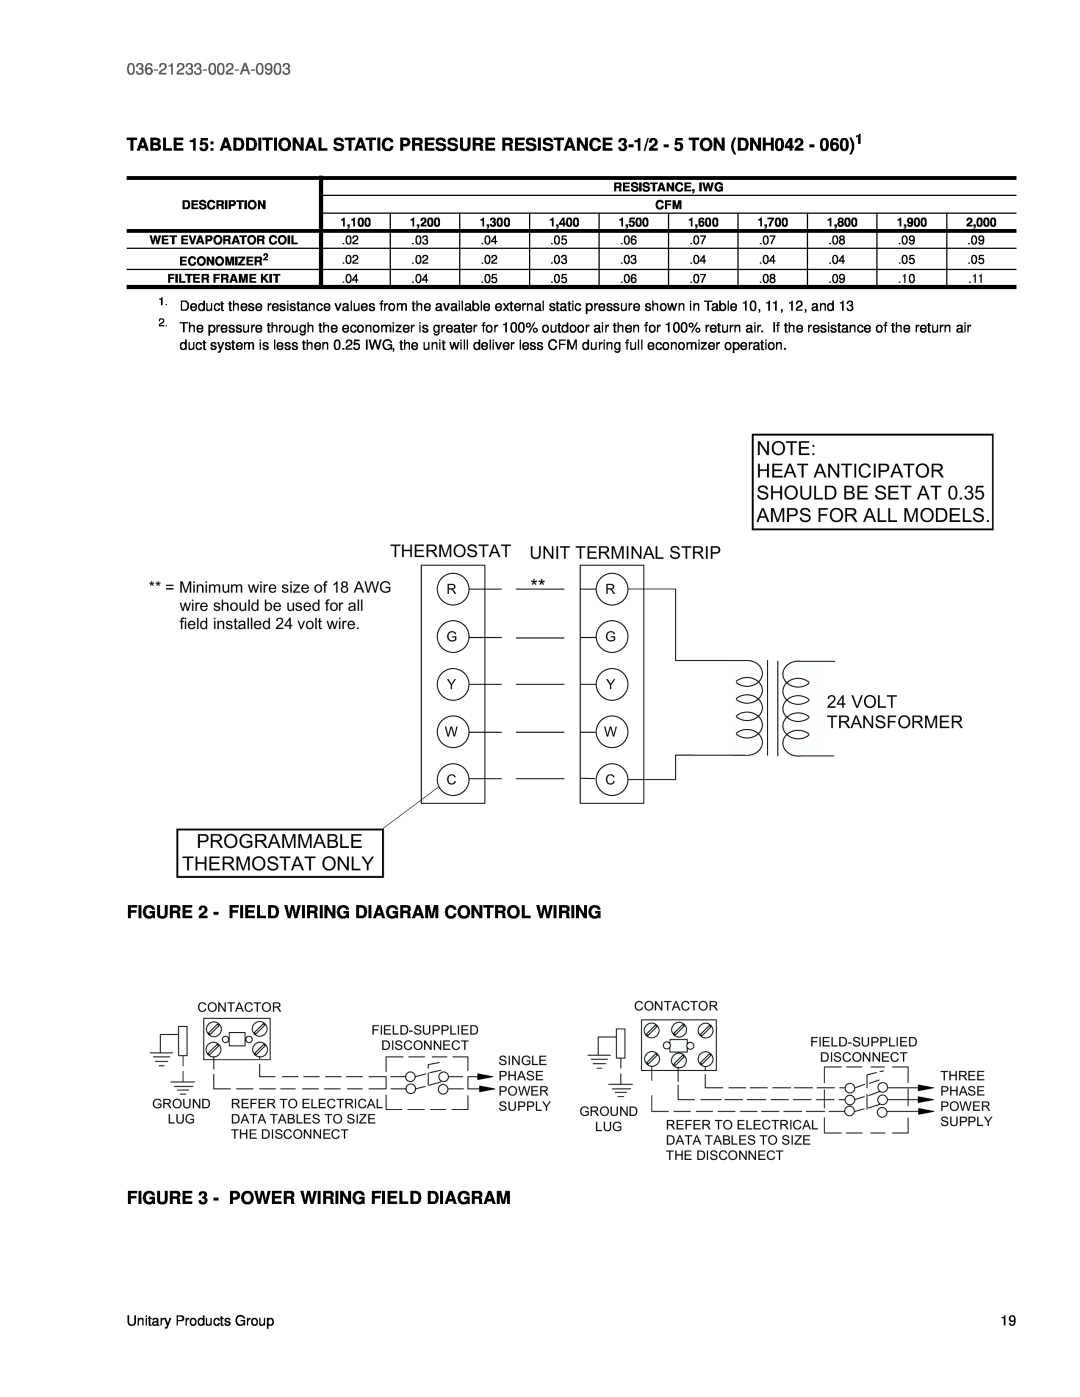 York DNH018 warranty Programmable Thermostat Only, Unit Terminal Strip, 24VOLT TRANSFORMER, 036-21233-002-A-0903 